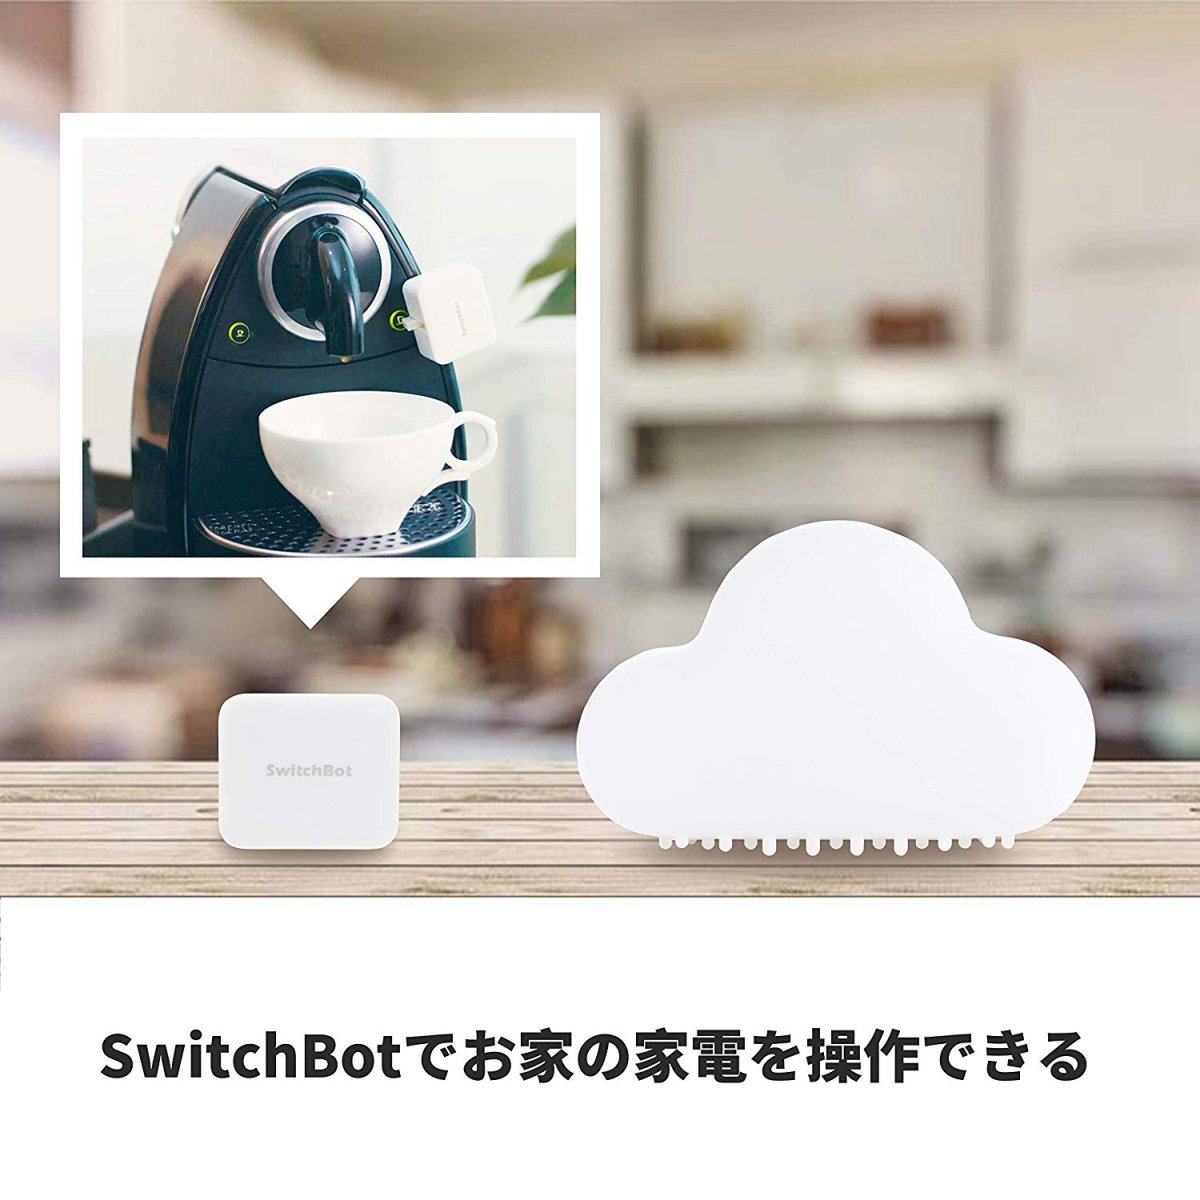 SwitchBot x1 + SwitchBotハブミニ（Hub Mini）セット - Wonder Labs正規代理店 スイッチボット通販専門店  スイッチボットオンライン